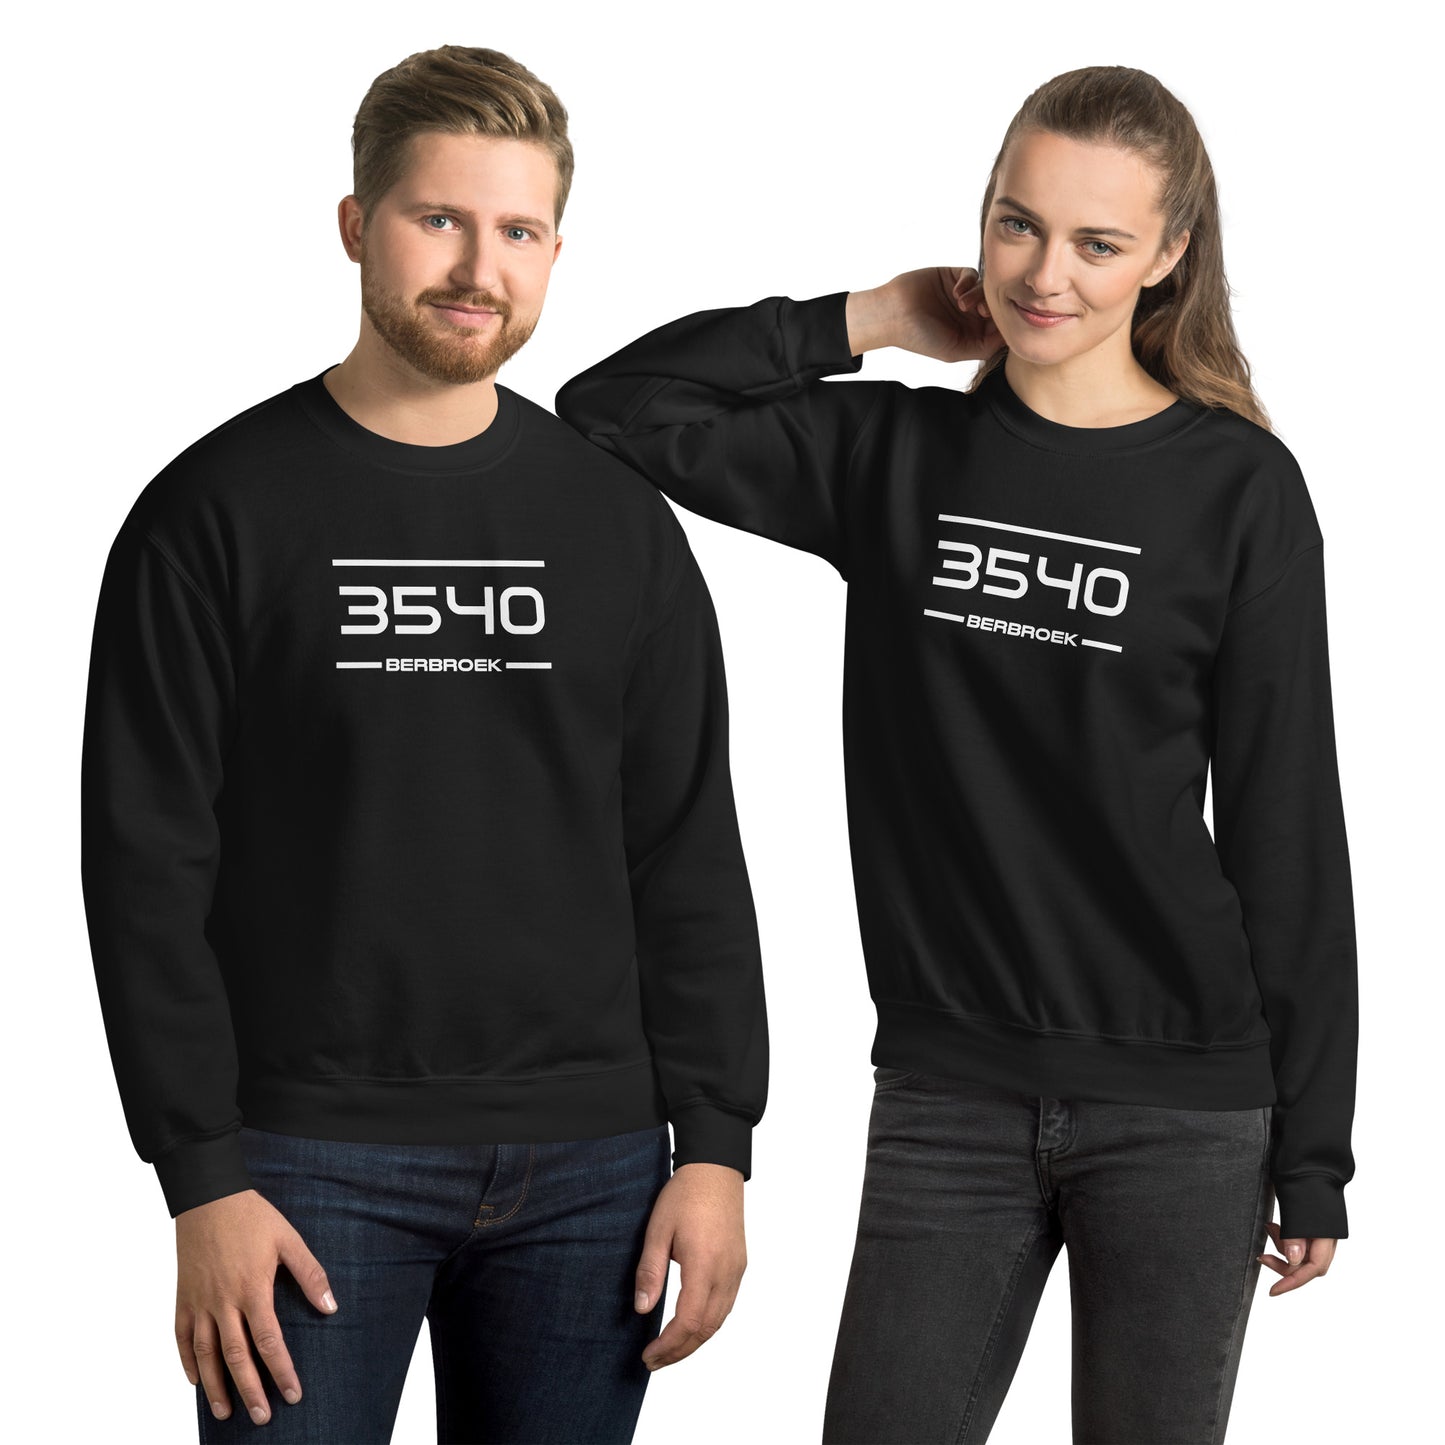 Sweater - 3540 - Berbroek (M/V)